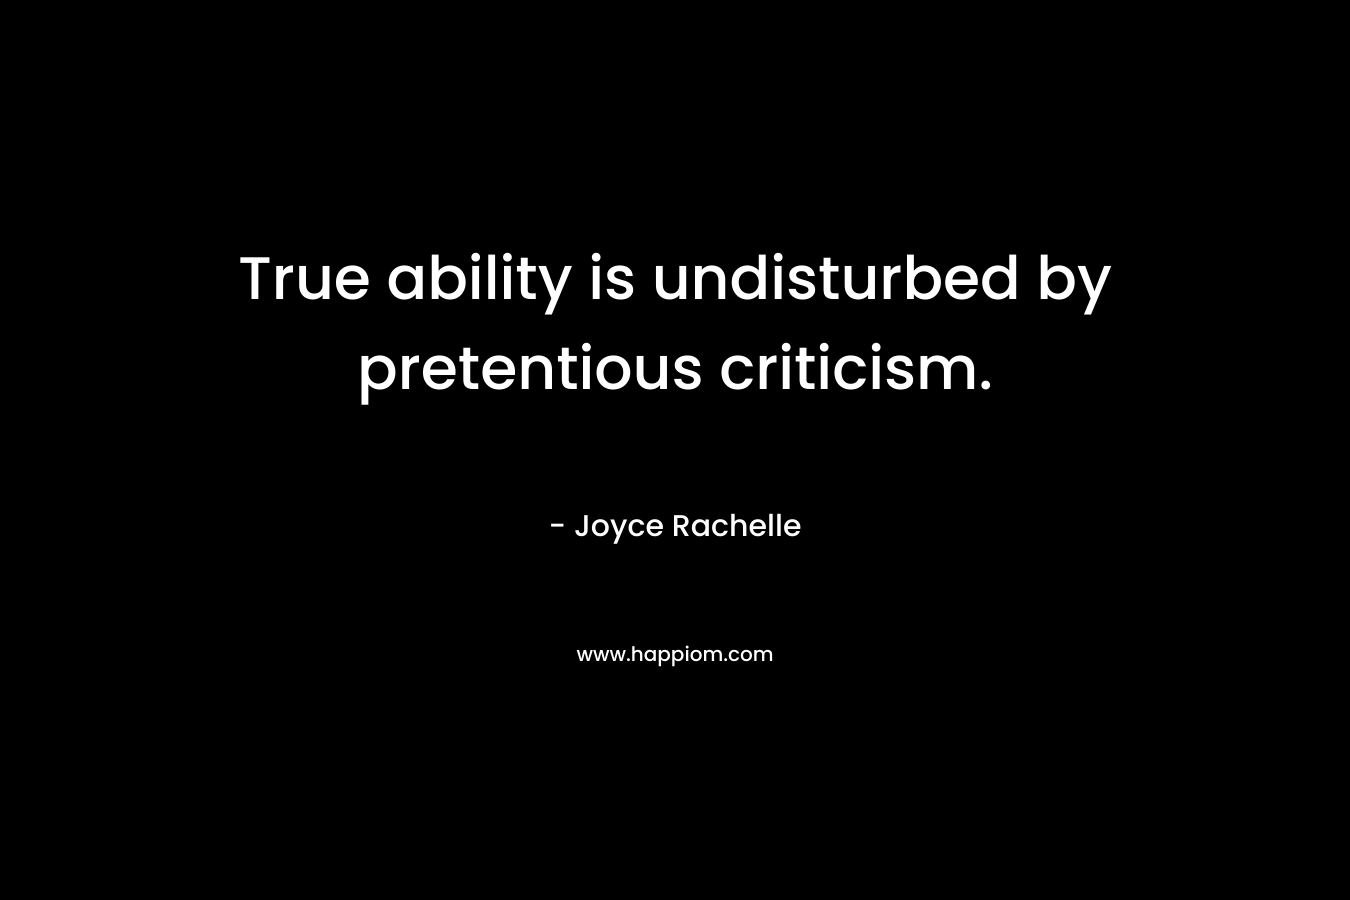 True ability is undisturbed by pretentious criticism. – Joyce Rachelle